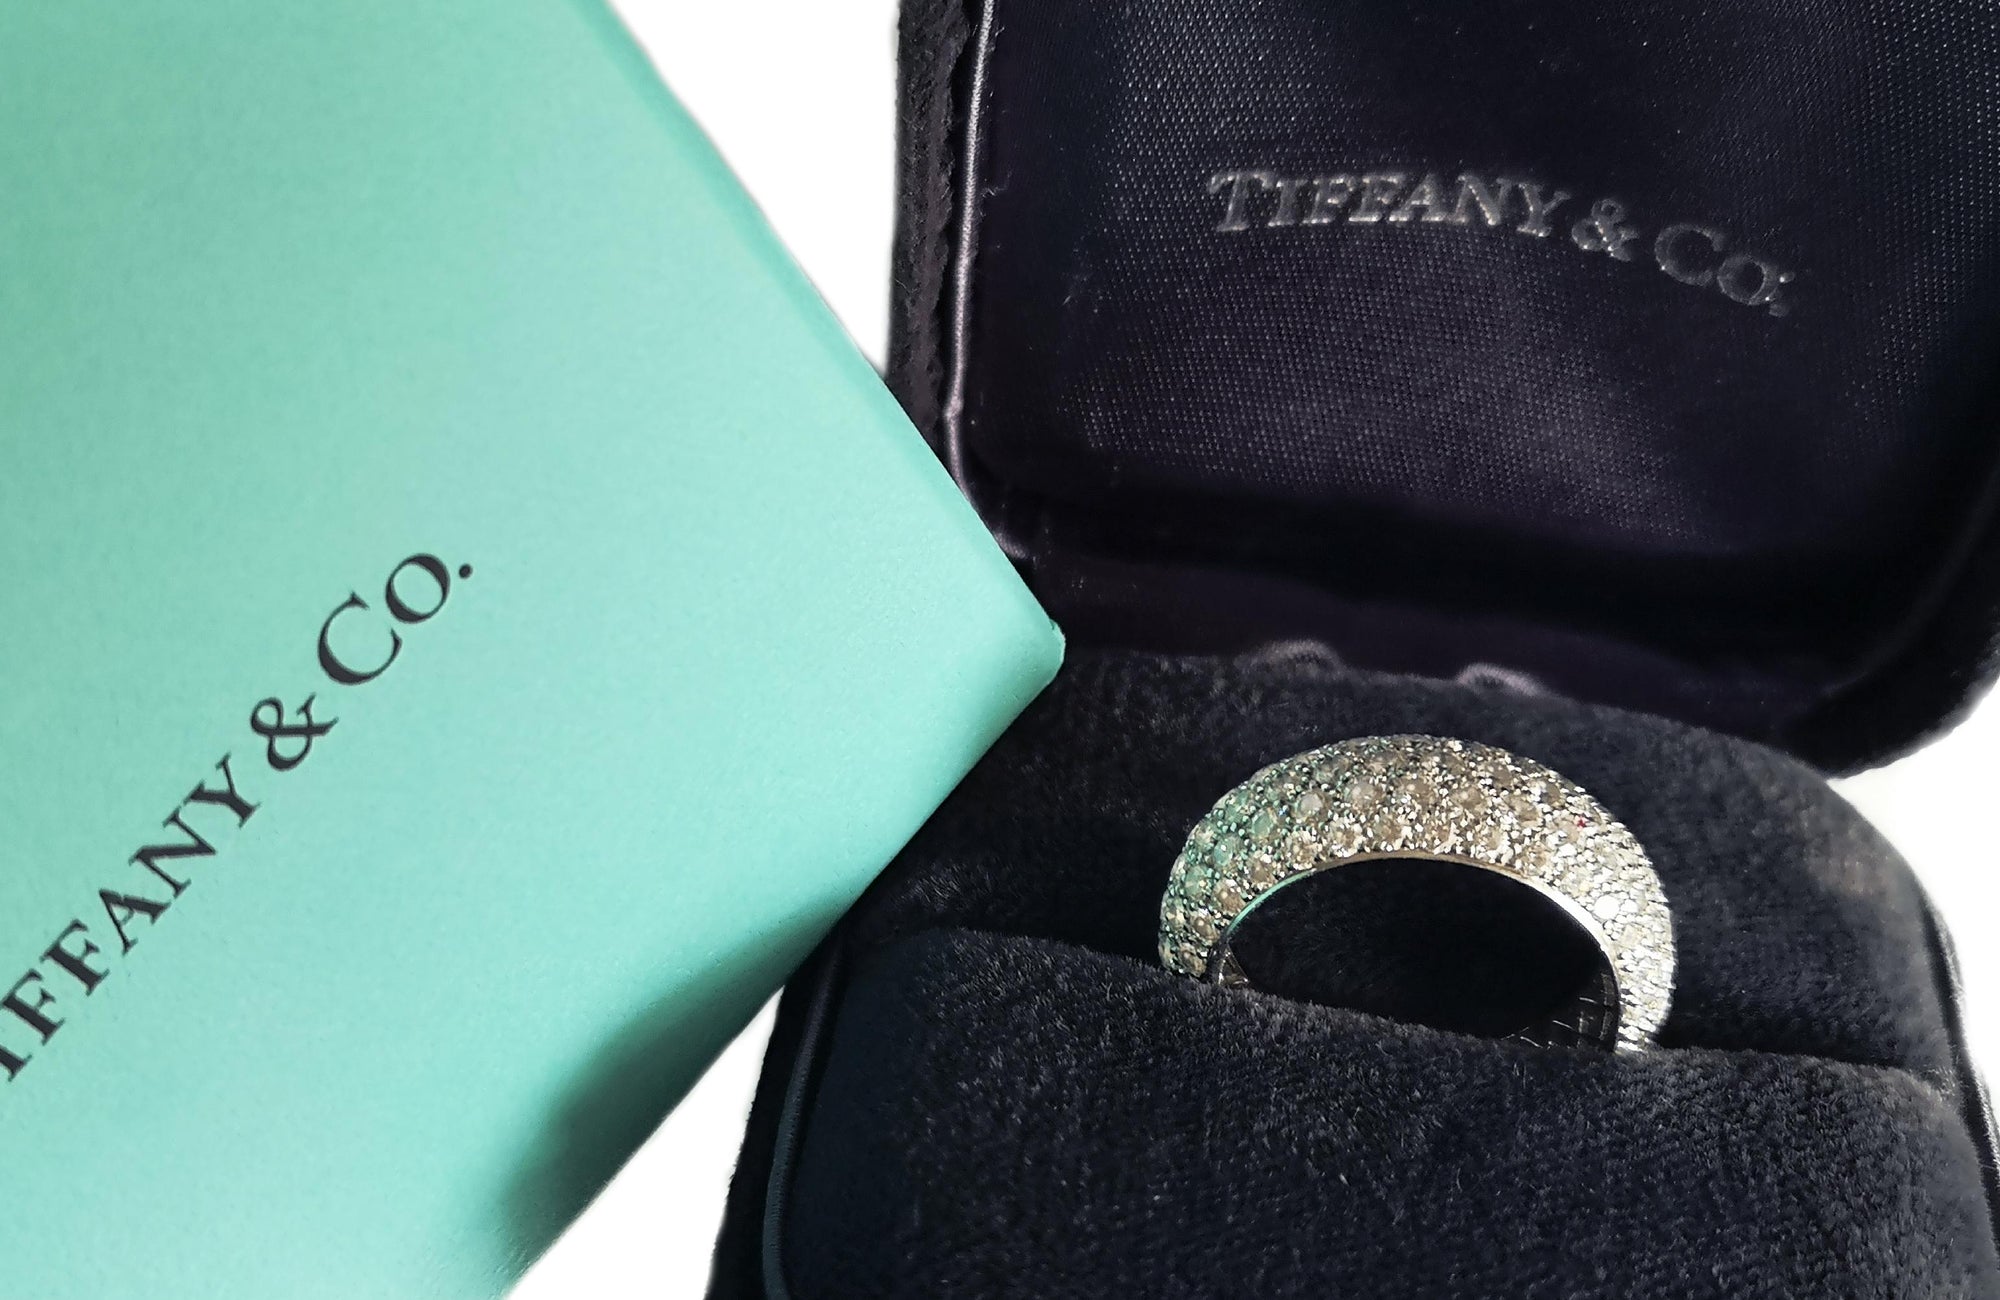 Tiffany & Co. Five-Row Etoile 3.75tcw Diamond Pave Band Ring